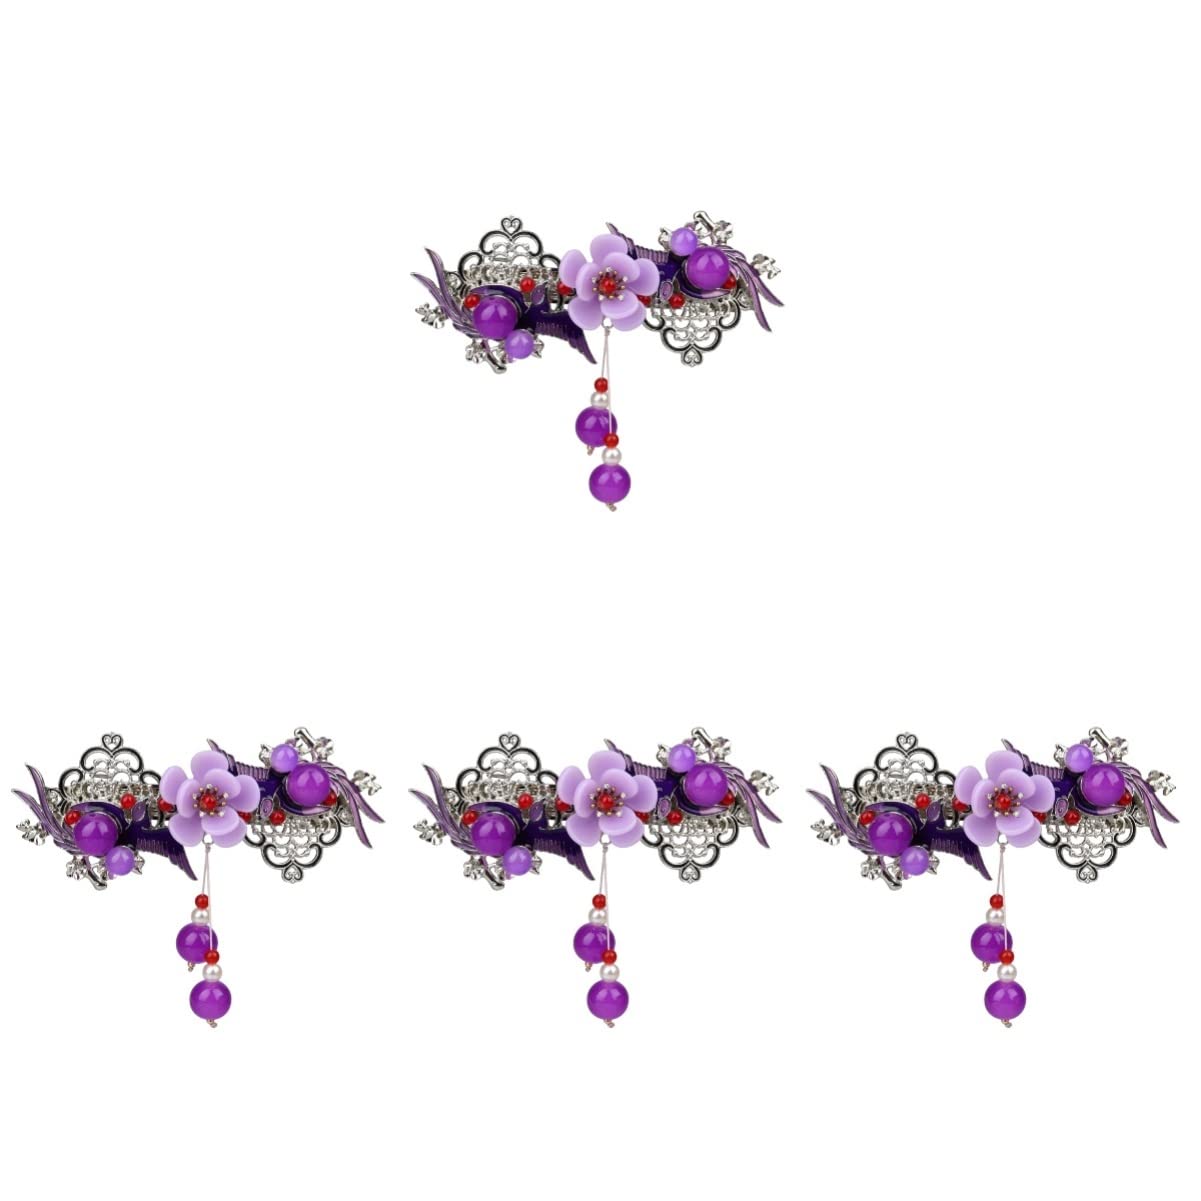 SHUBIAO 6 Stück Vintage Dekorative Blume Blume Haarspangen for Frauen Dekorative Haarspangen Haarschmuck for Frauen Haarspange Quaste Haarspangen (Color : Purple, Size : 8.6X3.8X2.5CMx3pcs)